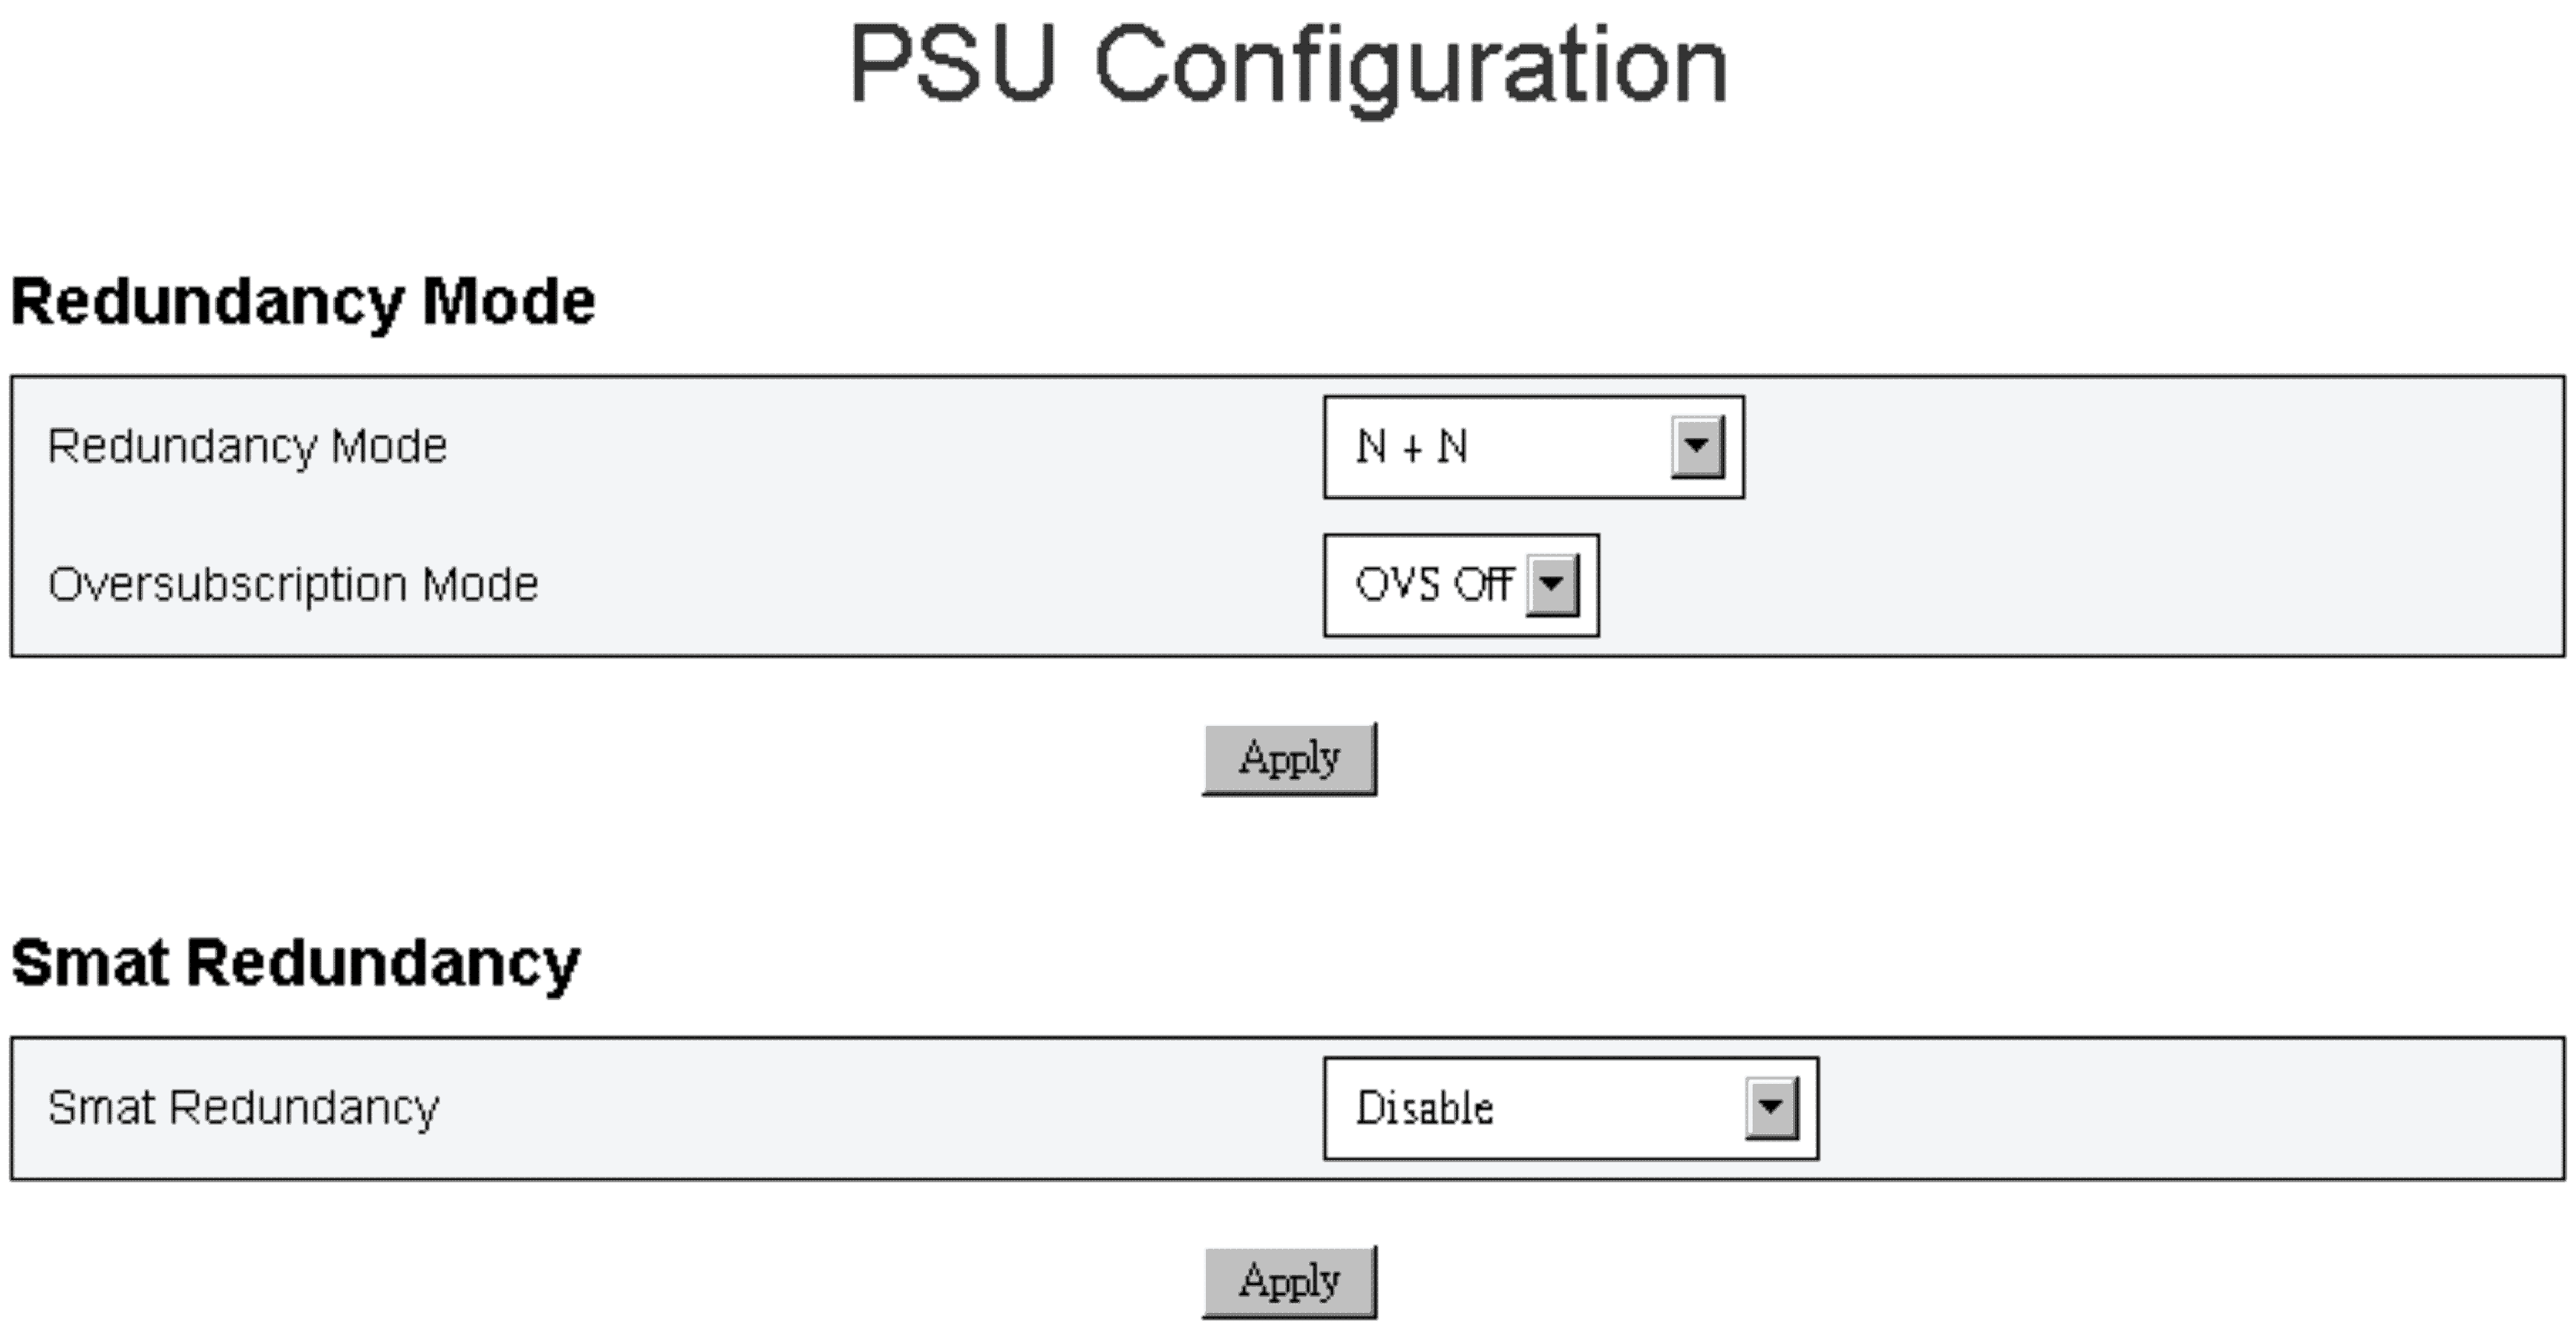 PSU Configuration